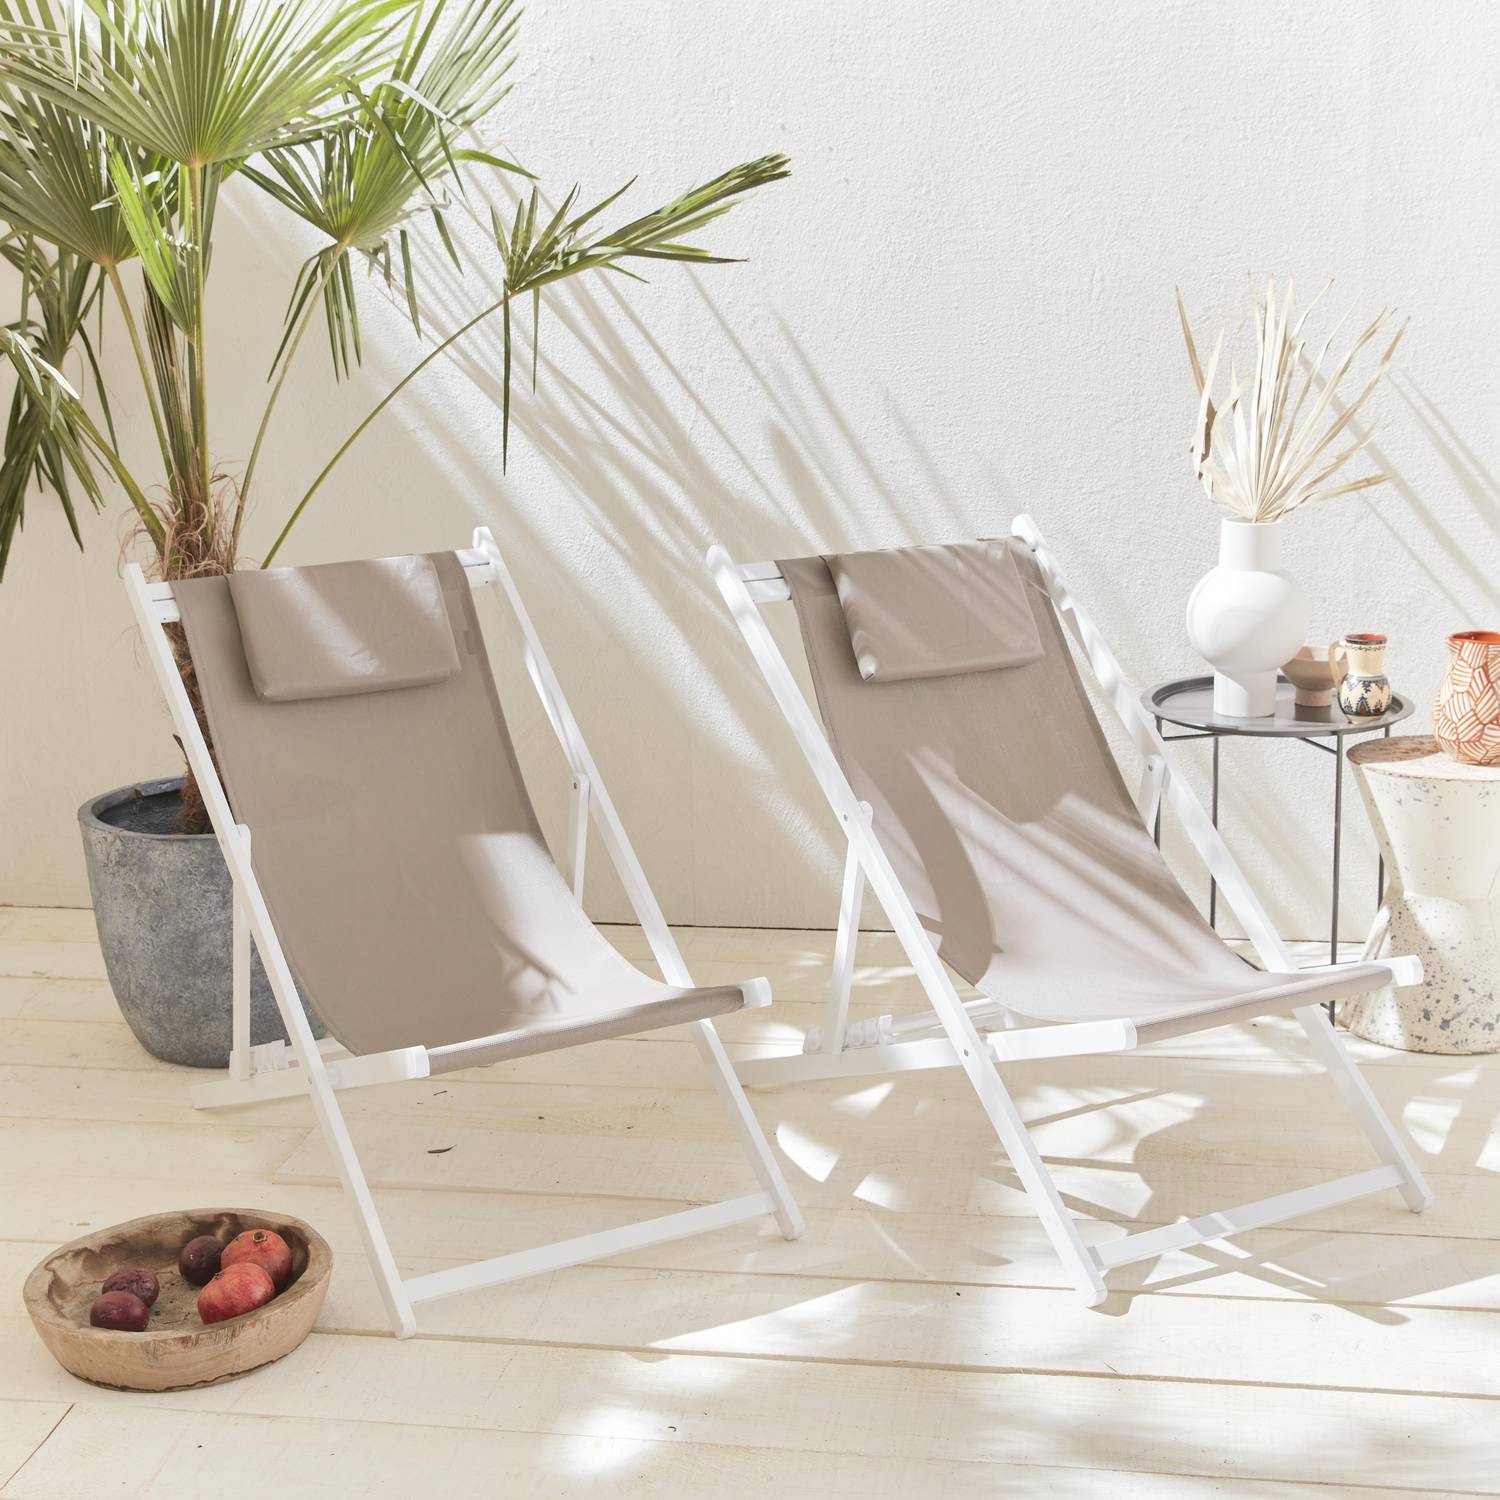 Juego de 2 sillas para tomar sol - Gaia taupe - Aluminio blanco y textileno taupe con reposacabezas. Photo1